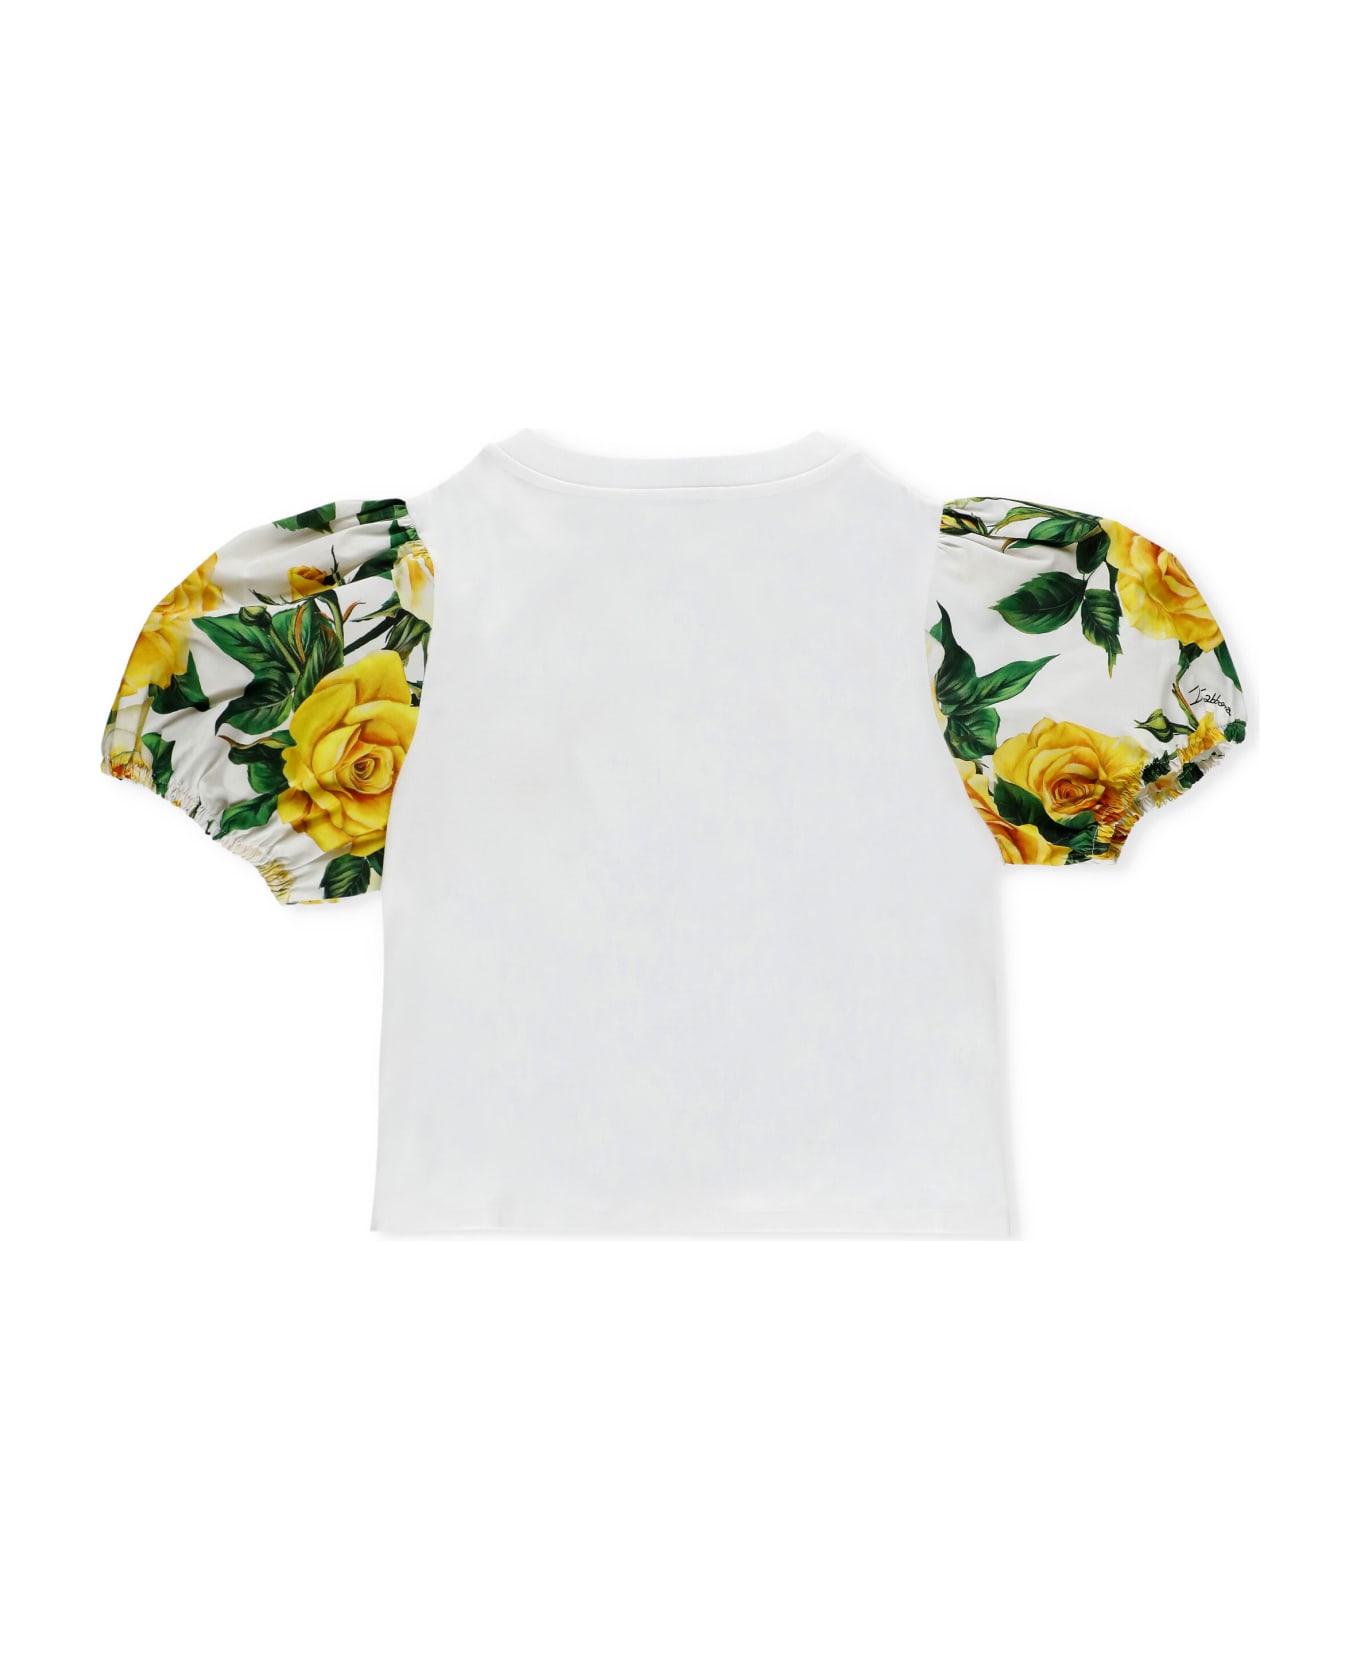 Dolce & Gabbana Cotton T-shirt - White